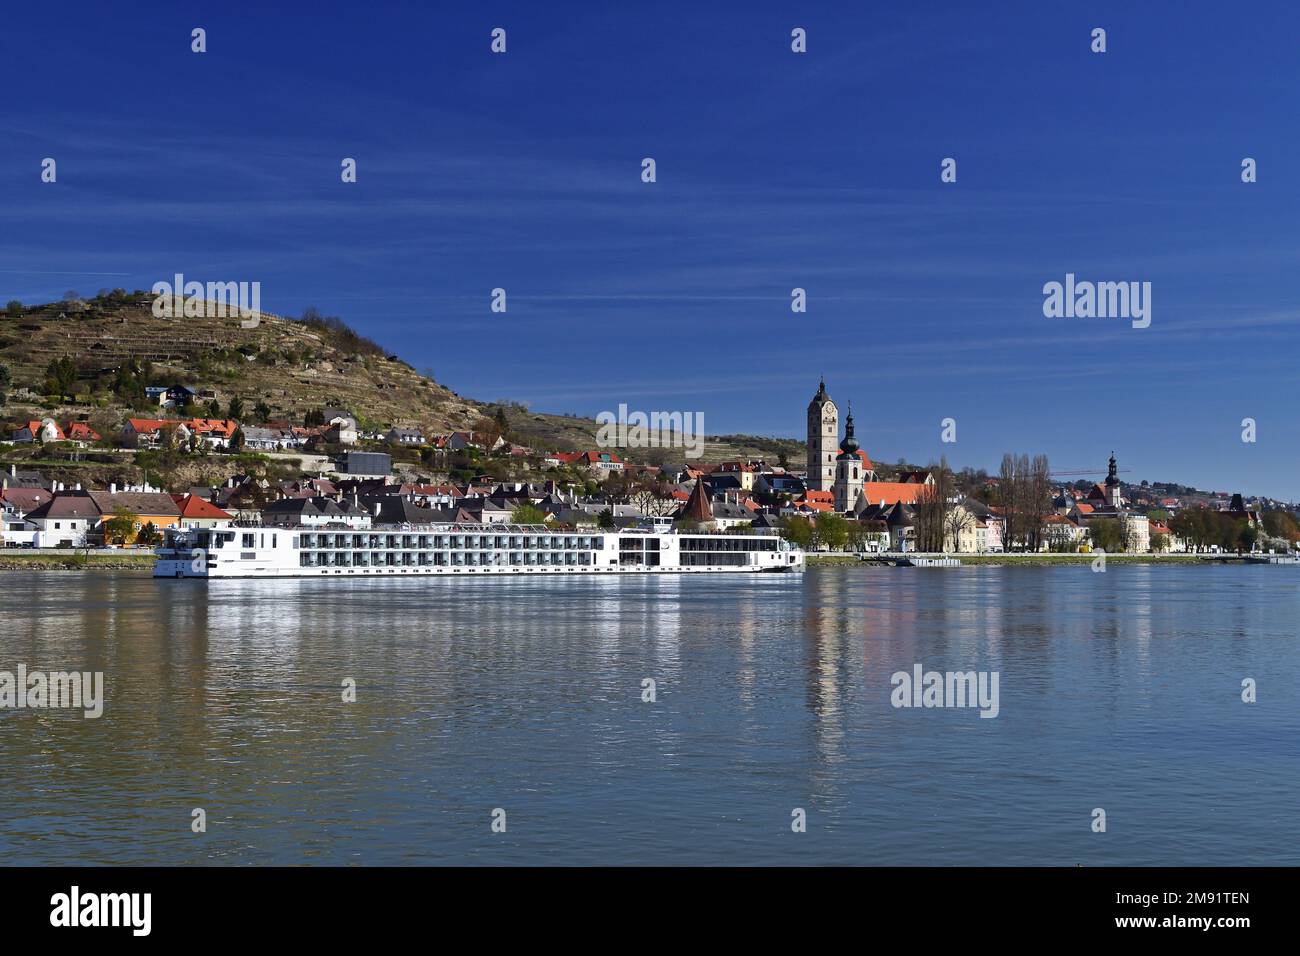 Cruise ship on the Danube river near Krems, Wachau in Austria Stock Photo